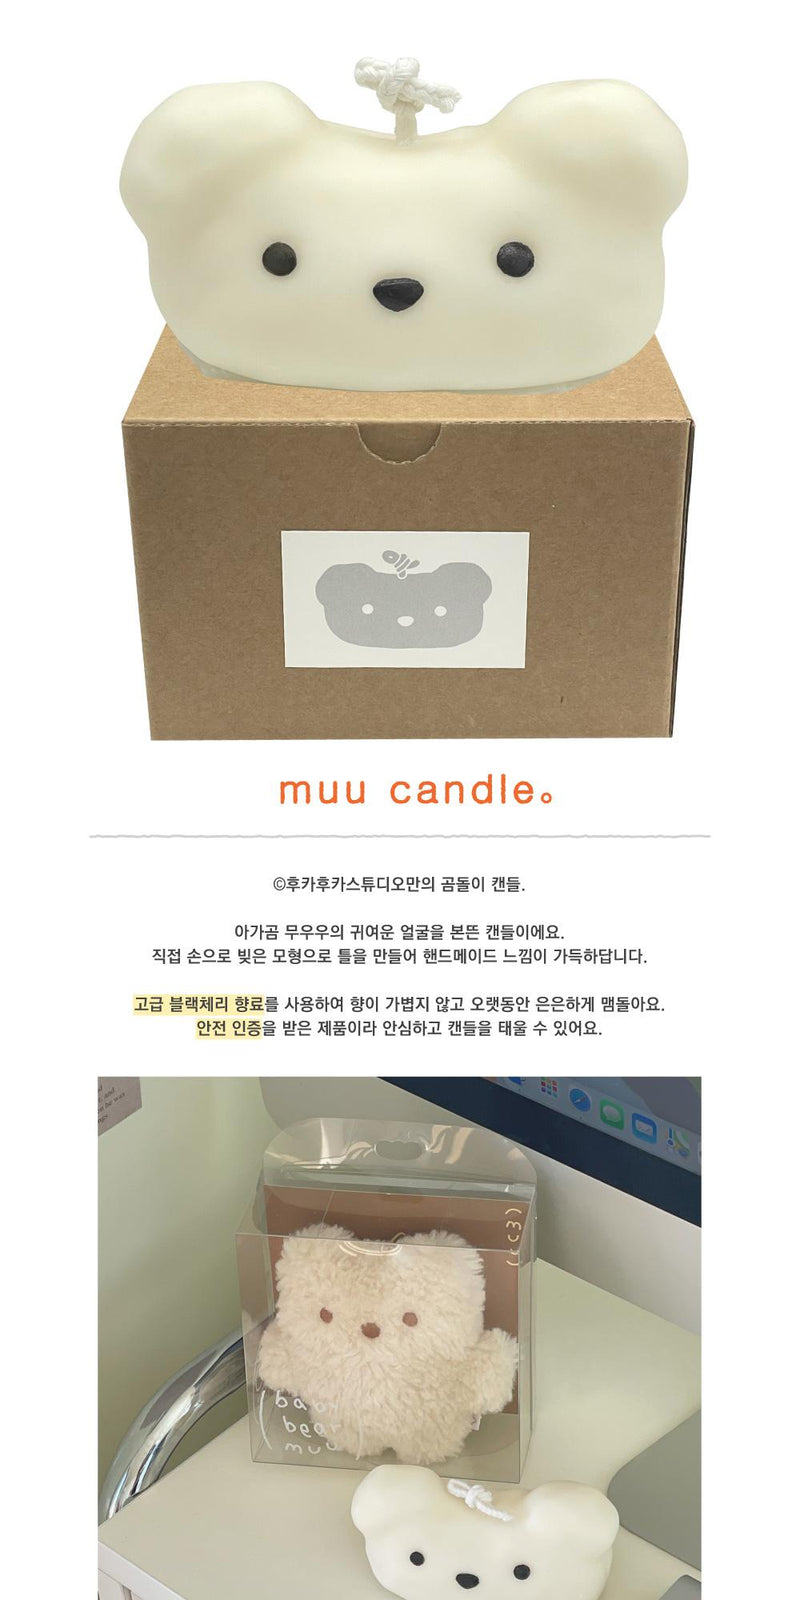 [YUNS] Muuu Candle 